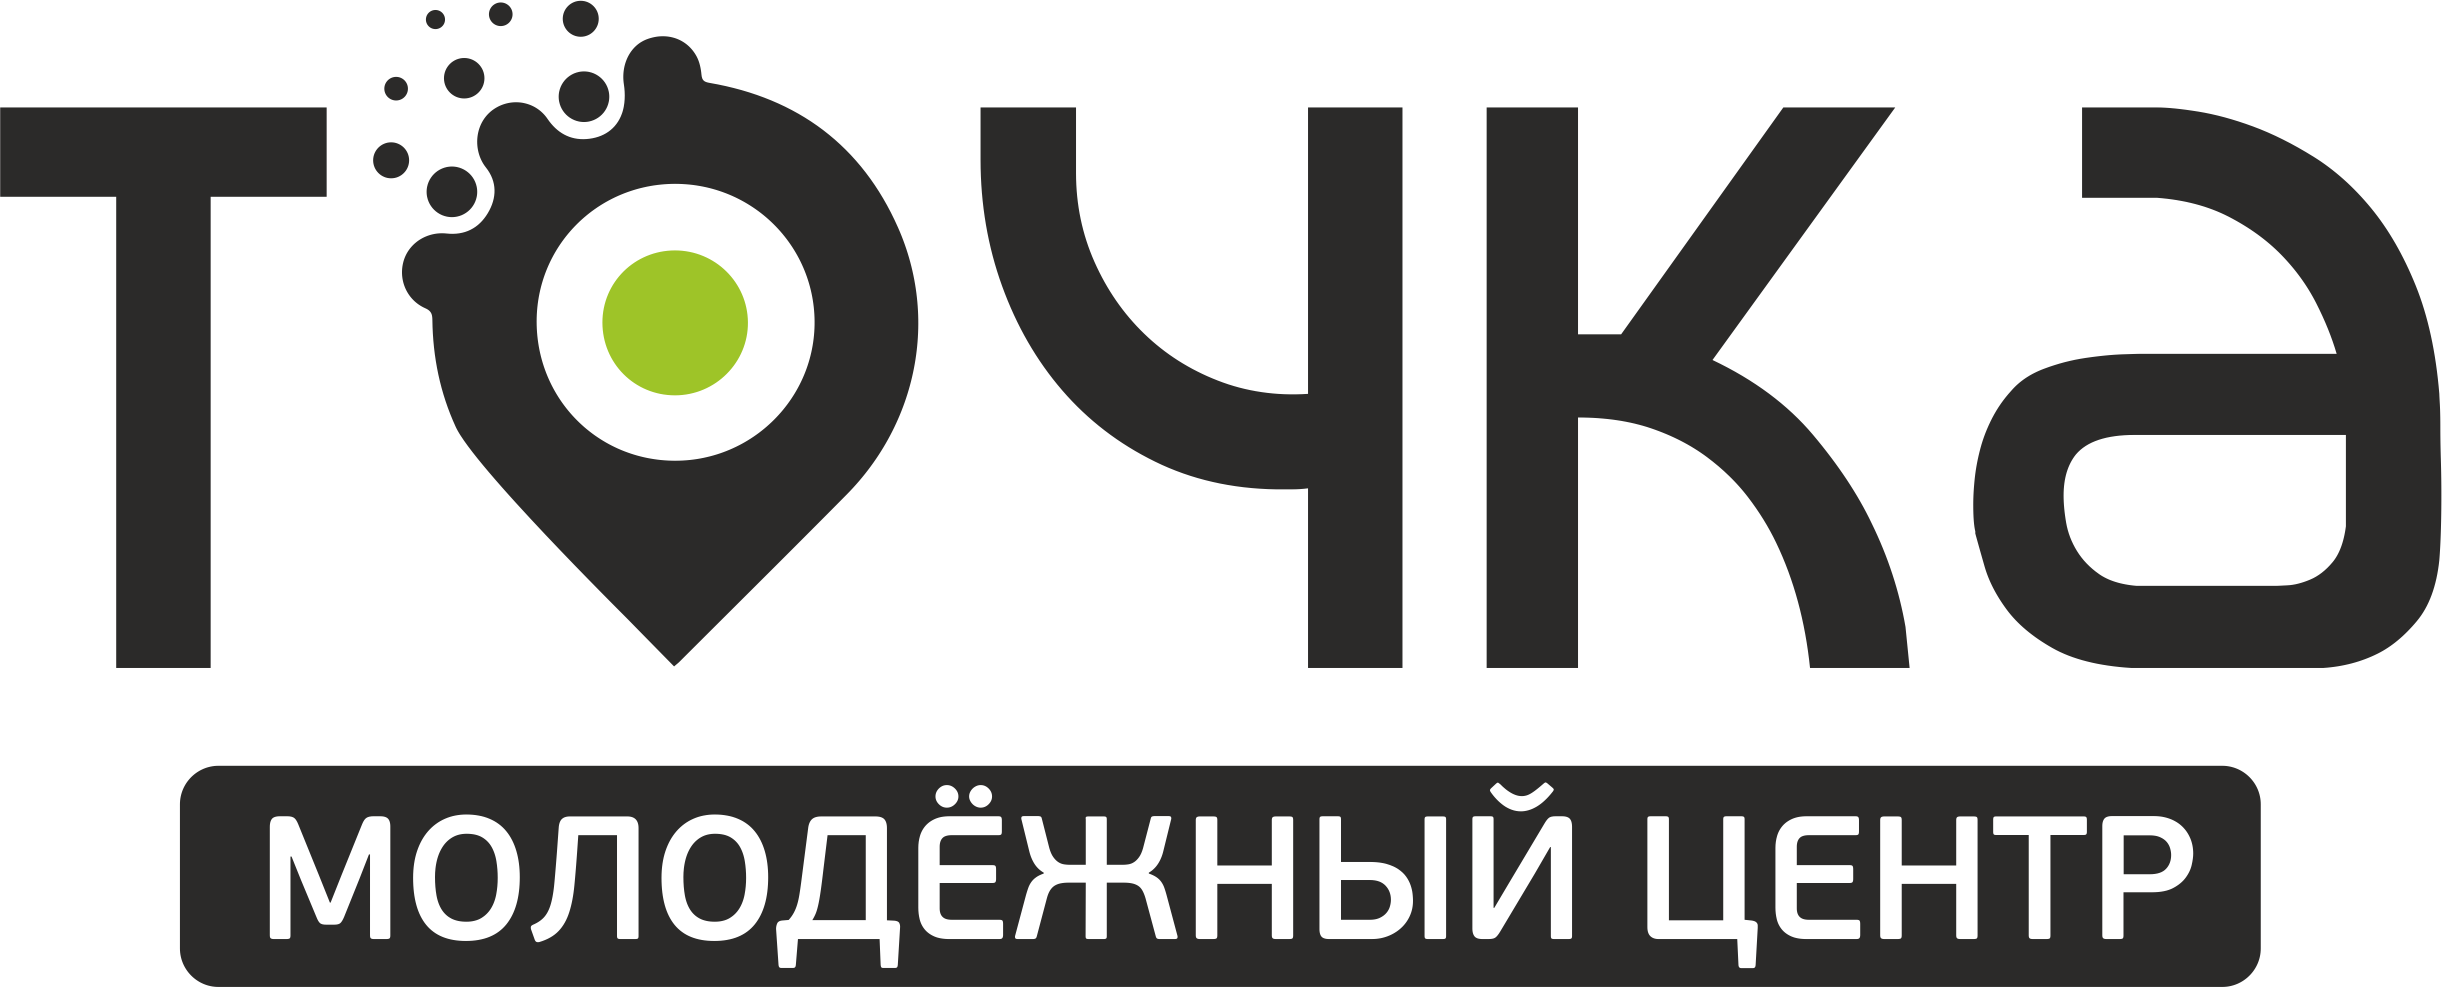 Логотип Молодежный центр «Точка»